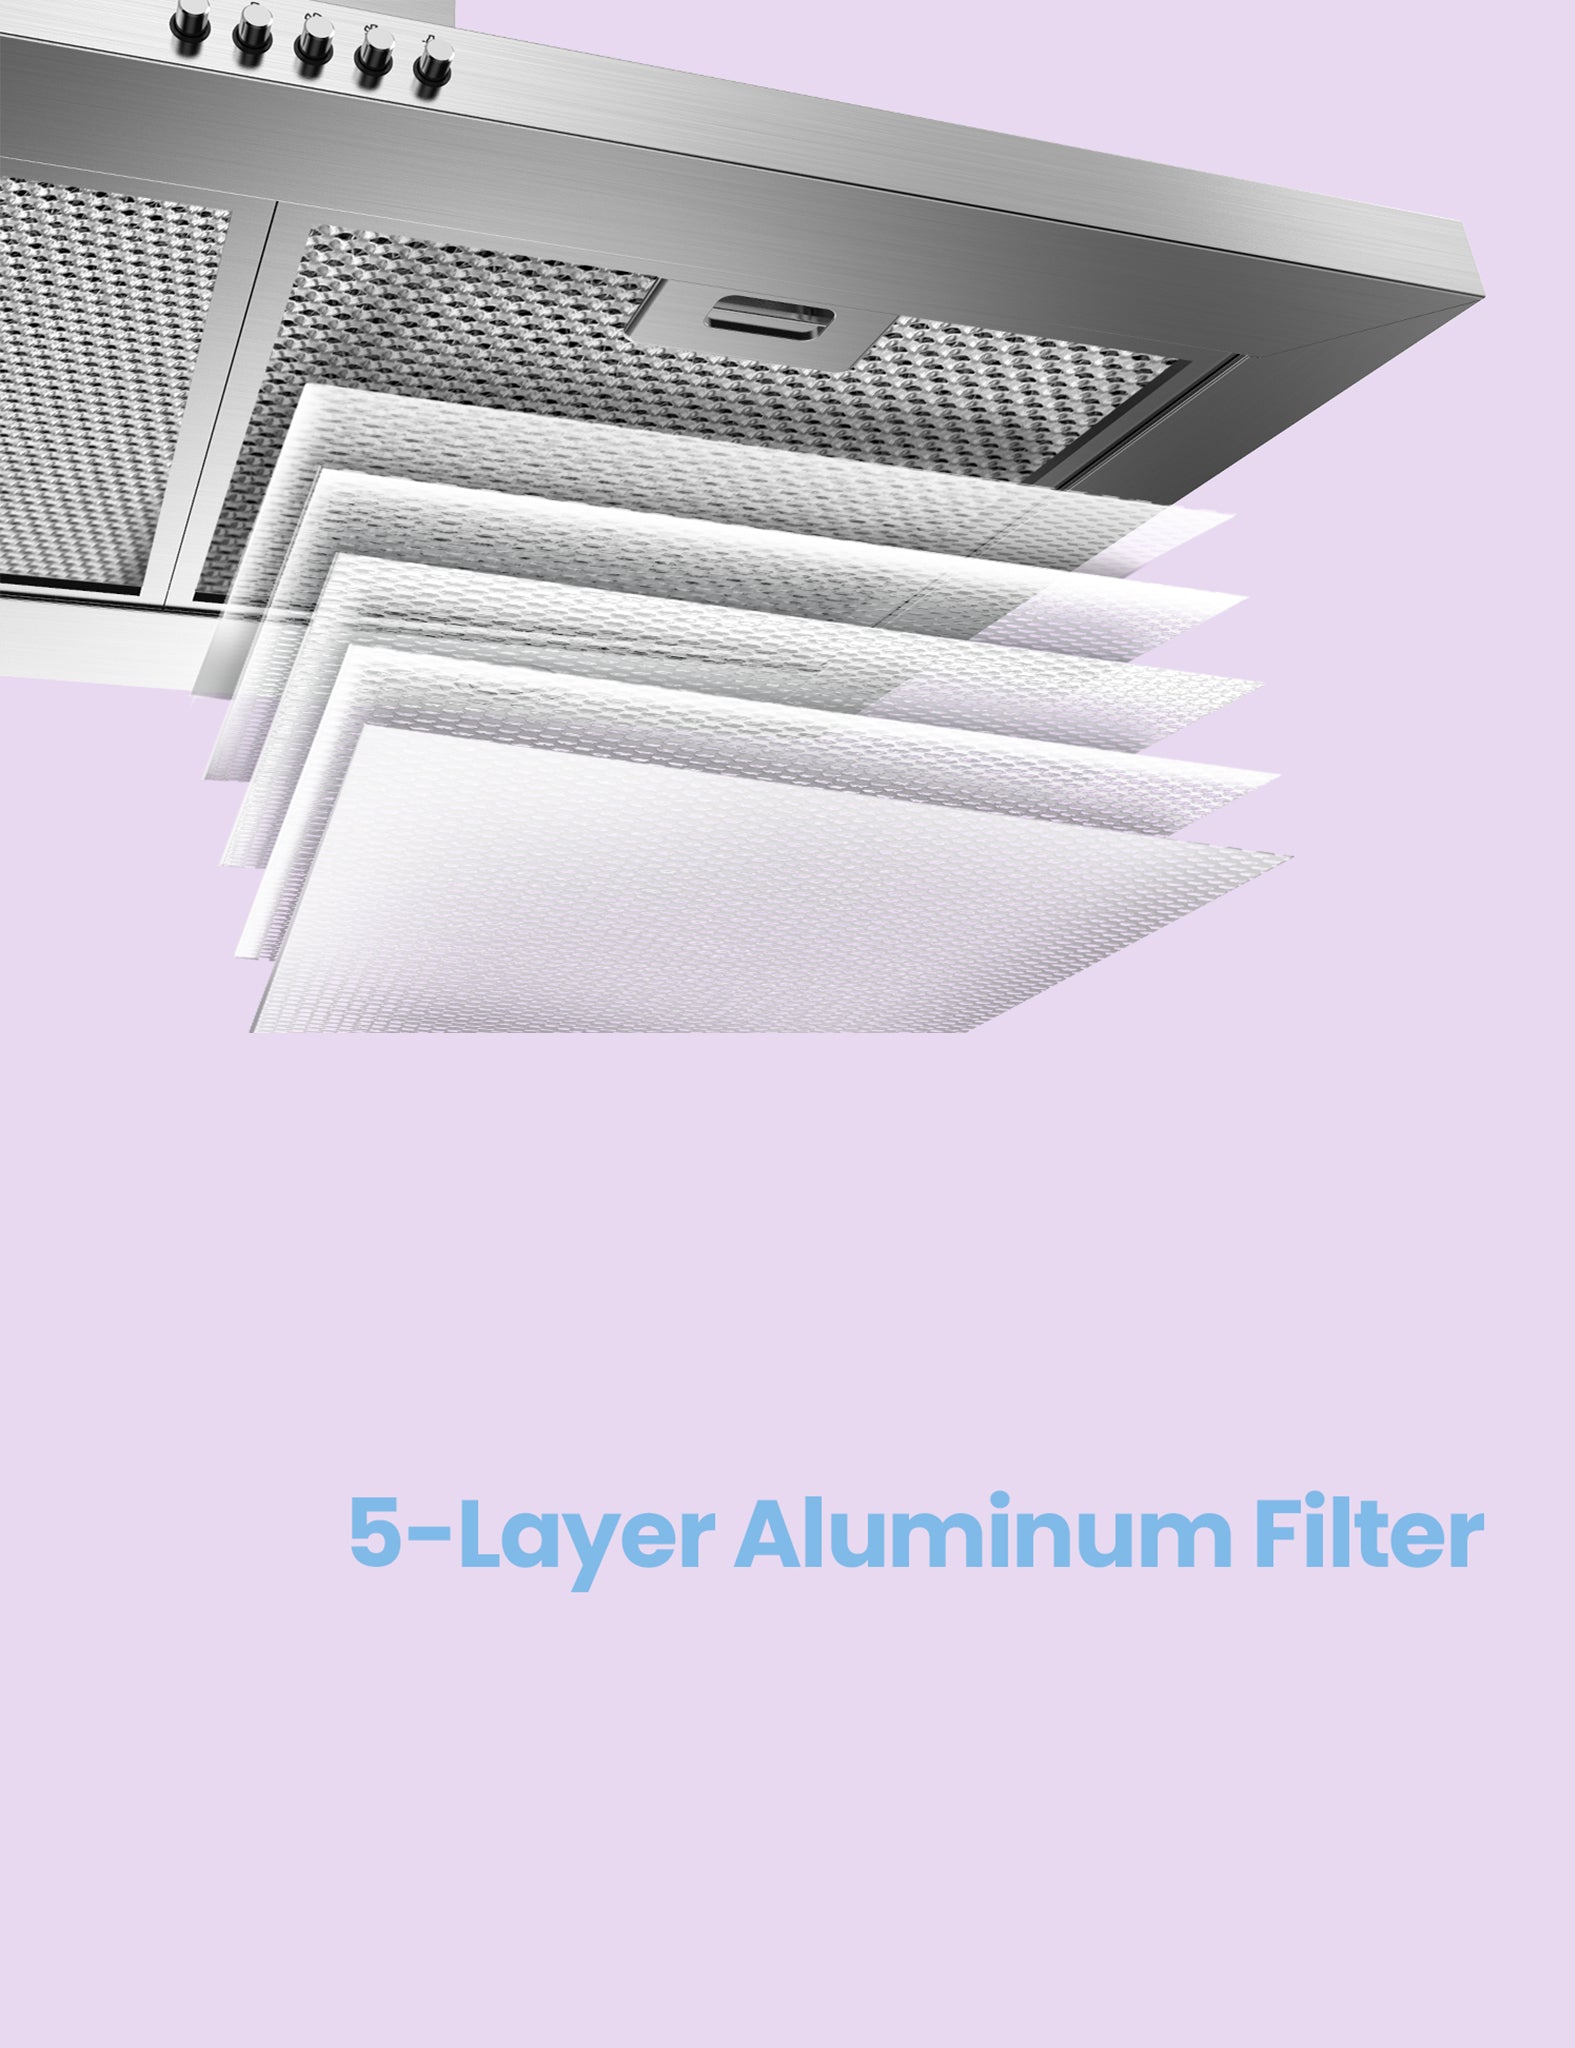 comfee ducted pyramid range hood five layer aluminium filter